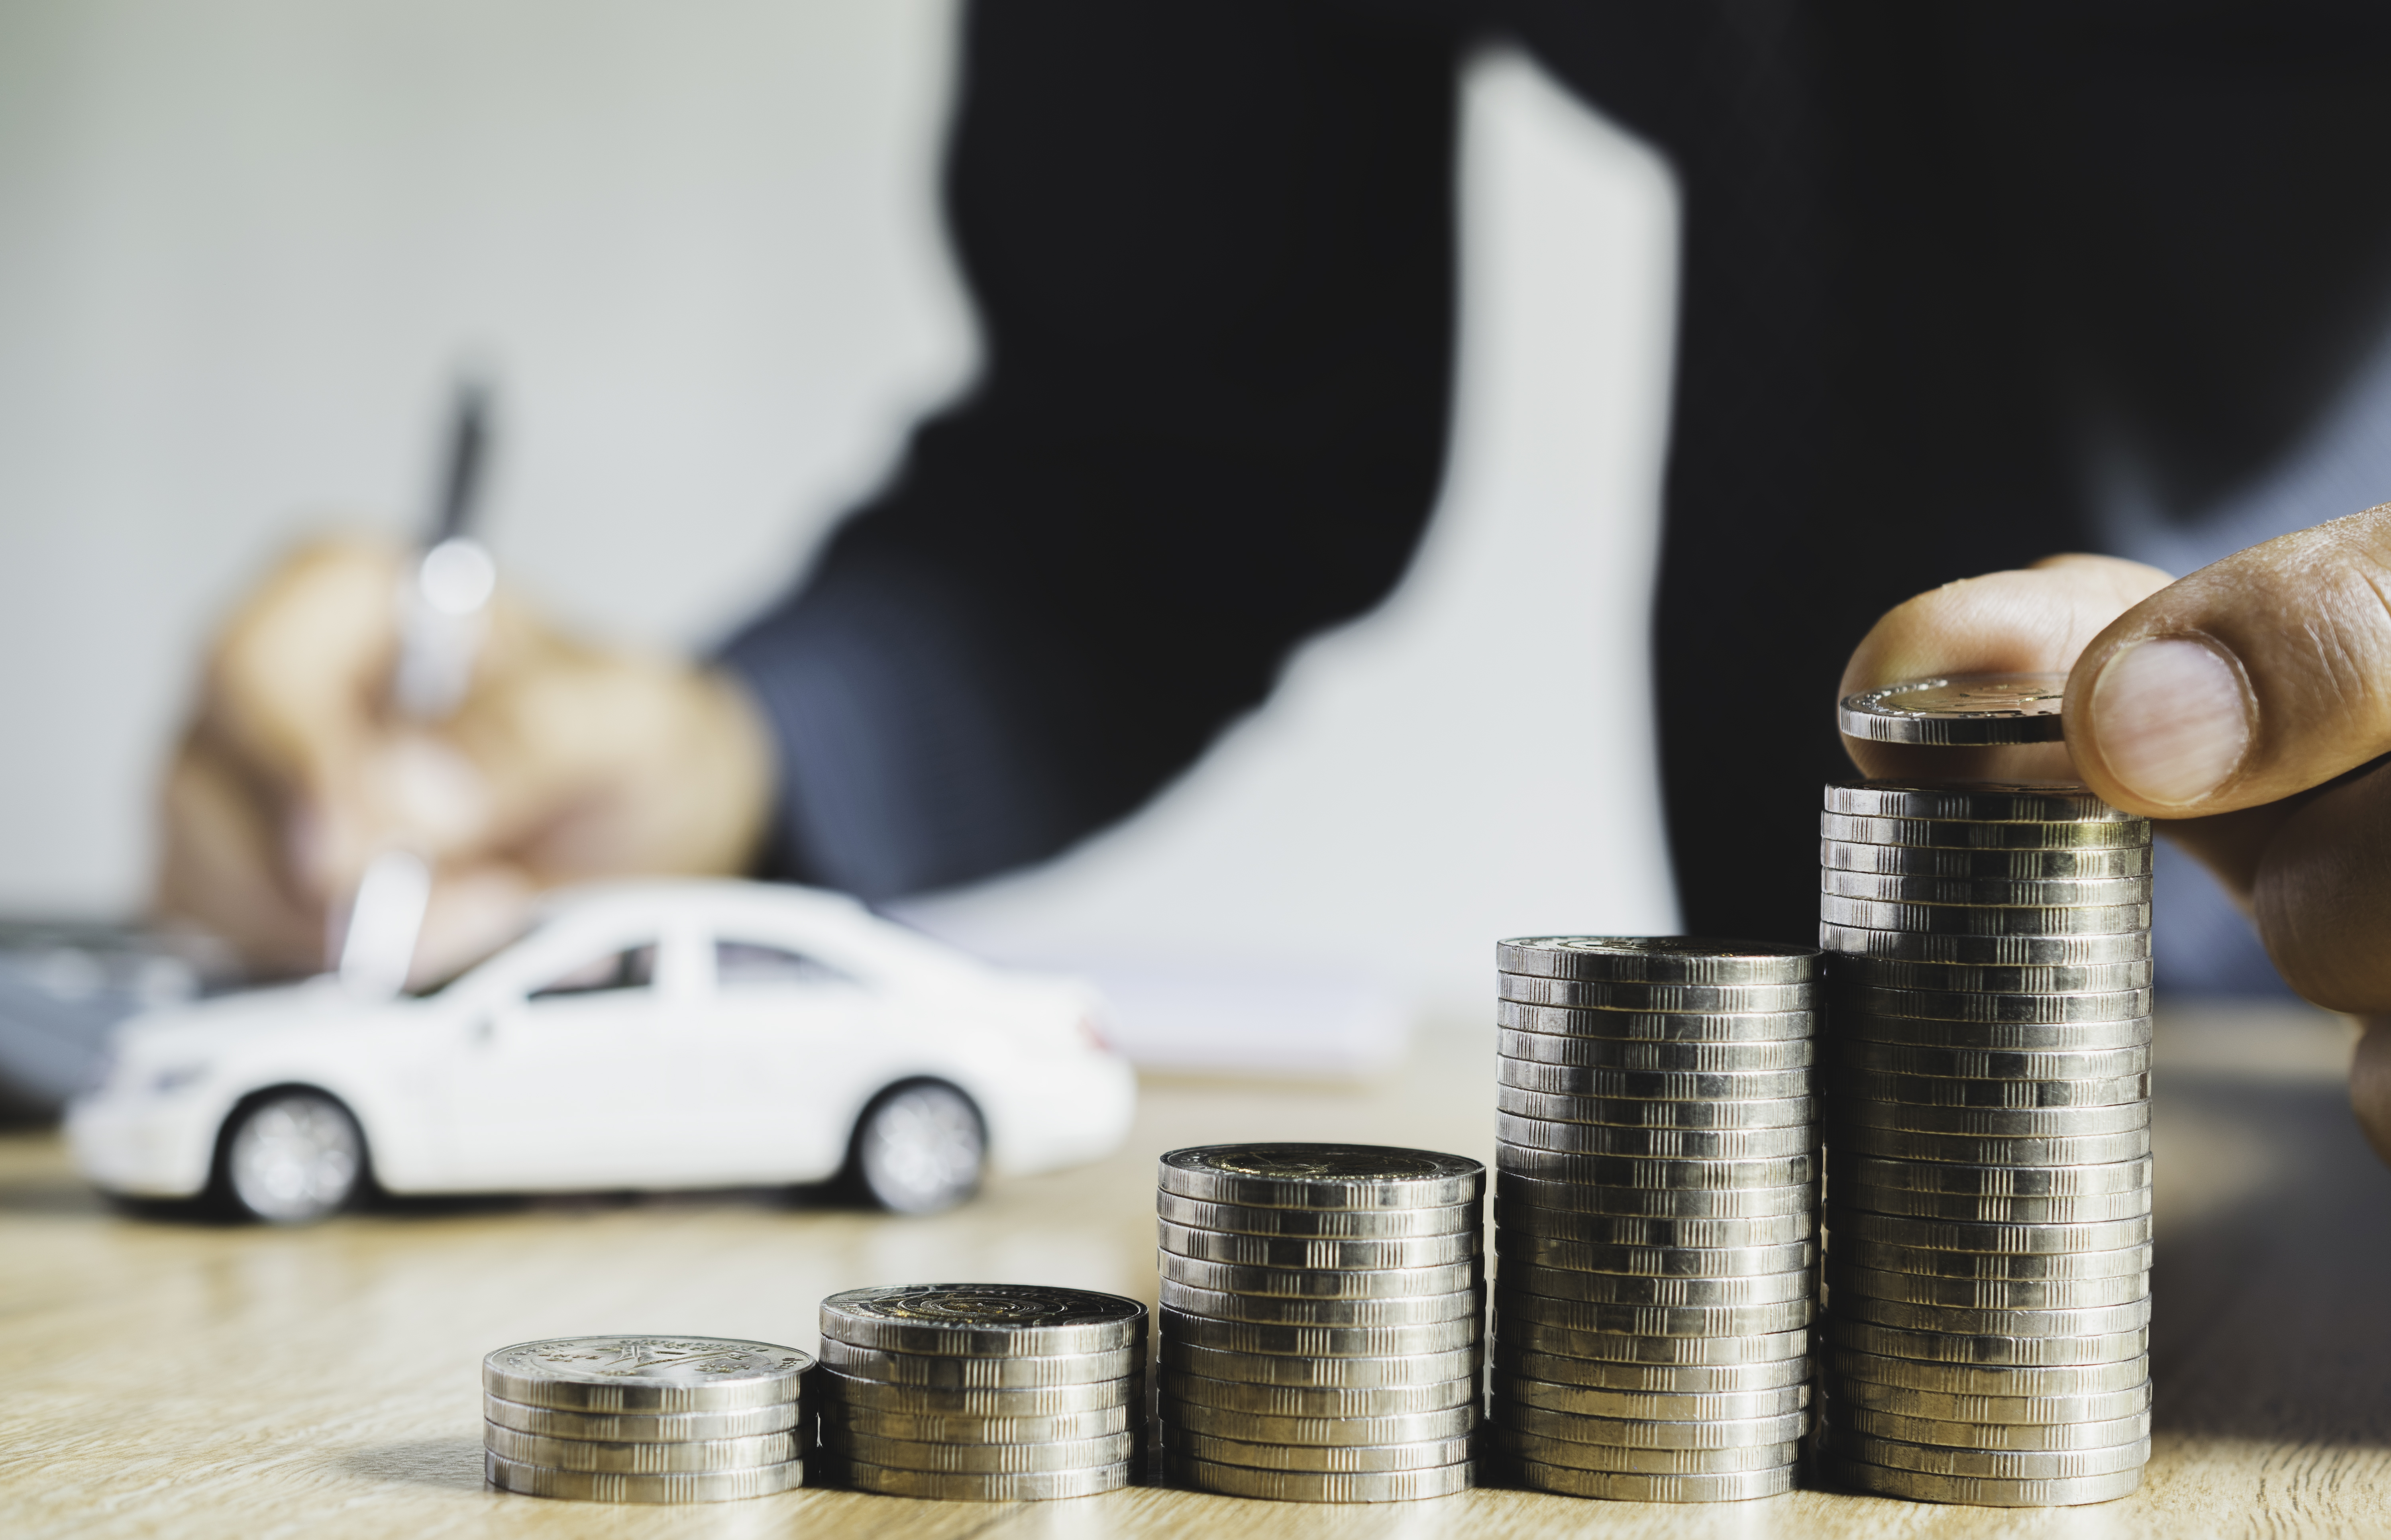 Brits due 'billions' over dodgy car finance deals, reveals top lawyer